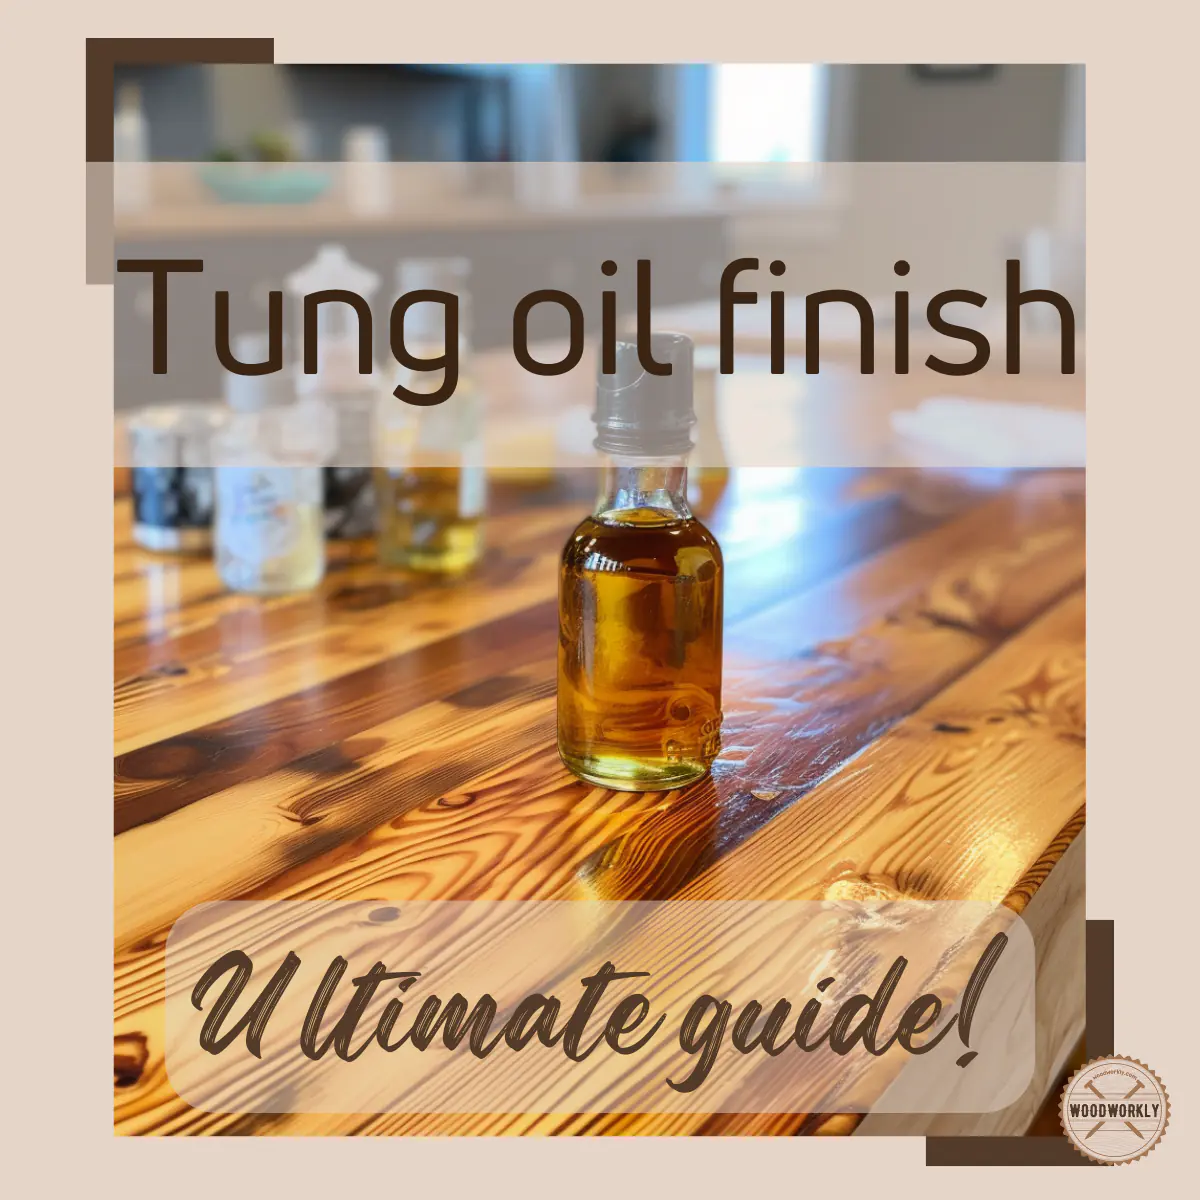 Tung oil finish